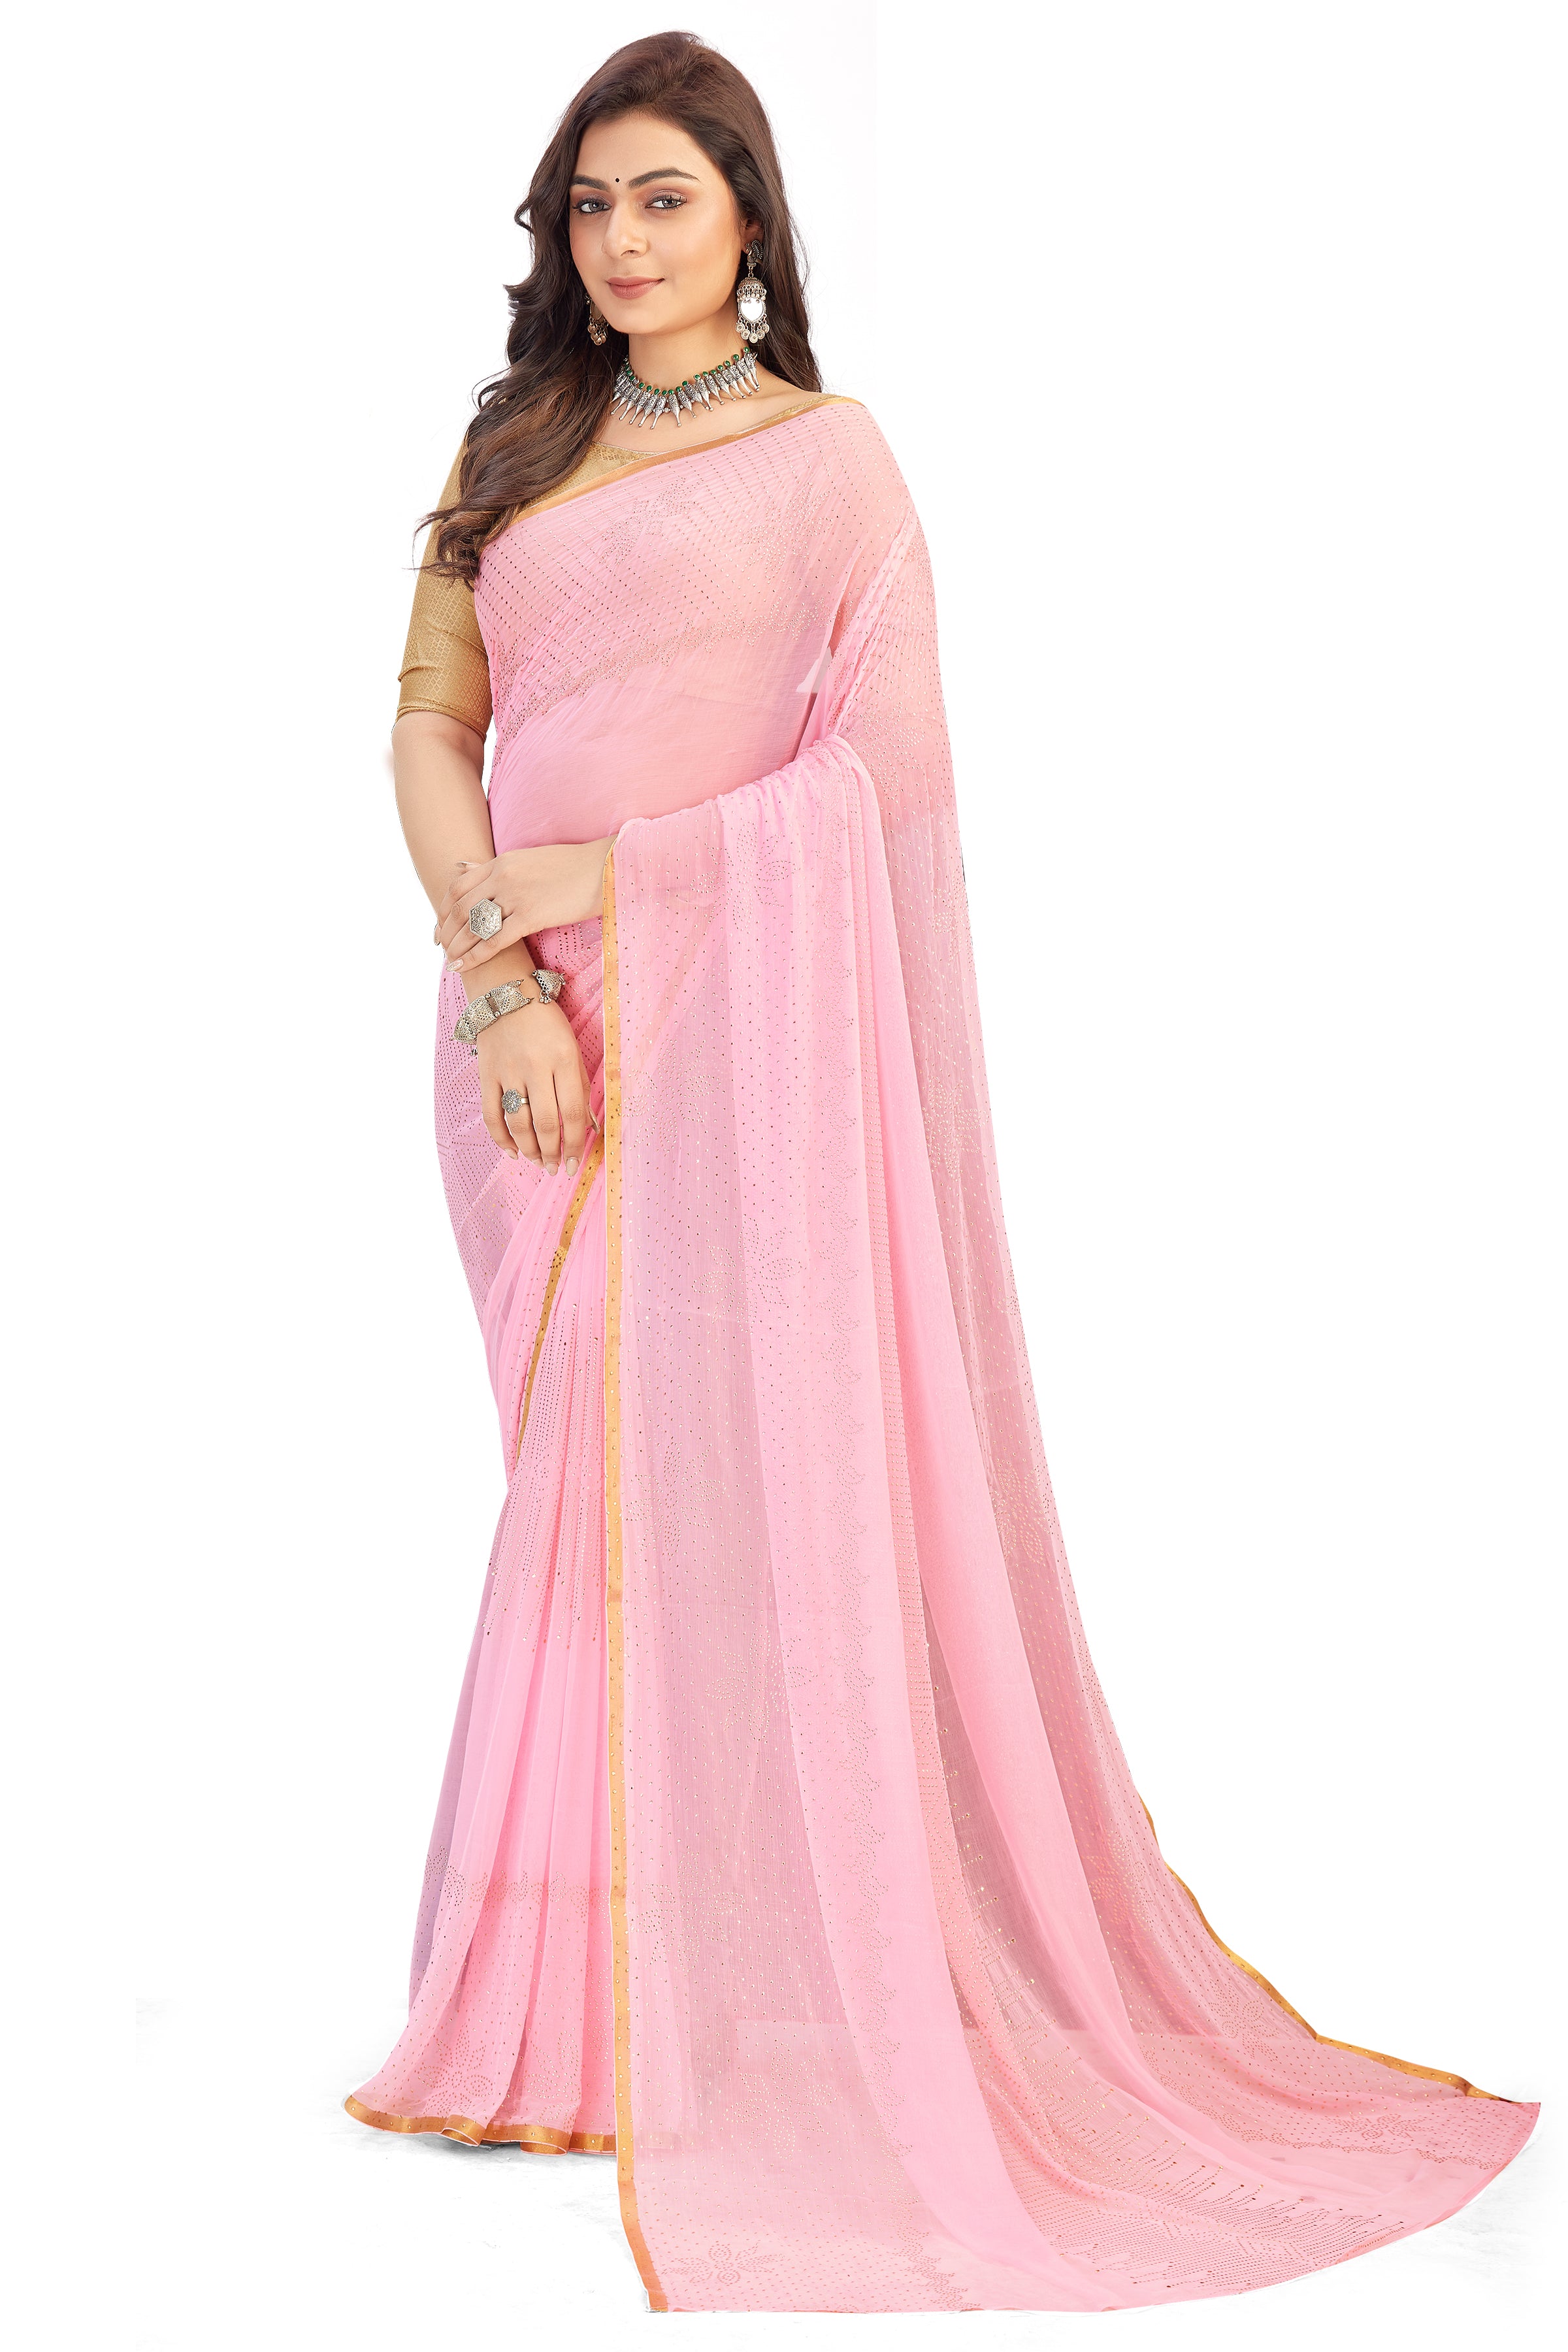 Women's Bandhani Daily Wear Chiffon Sari With Blouse Piece (Light PInk) - NIMIDHYA